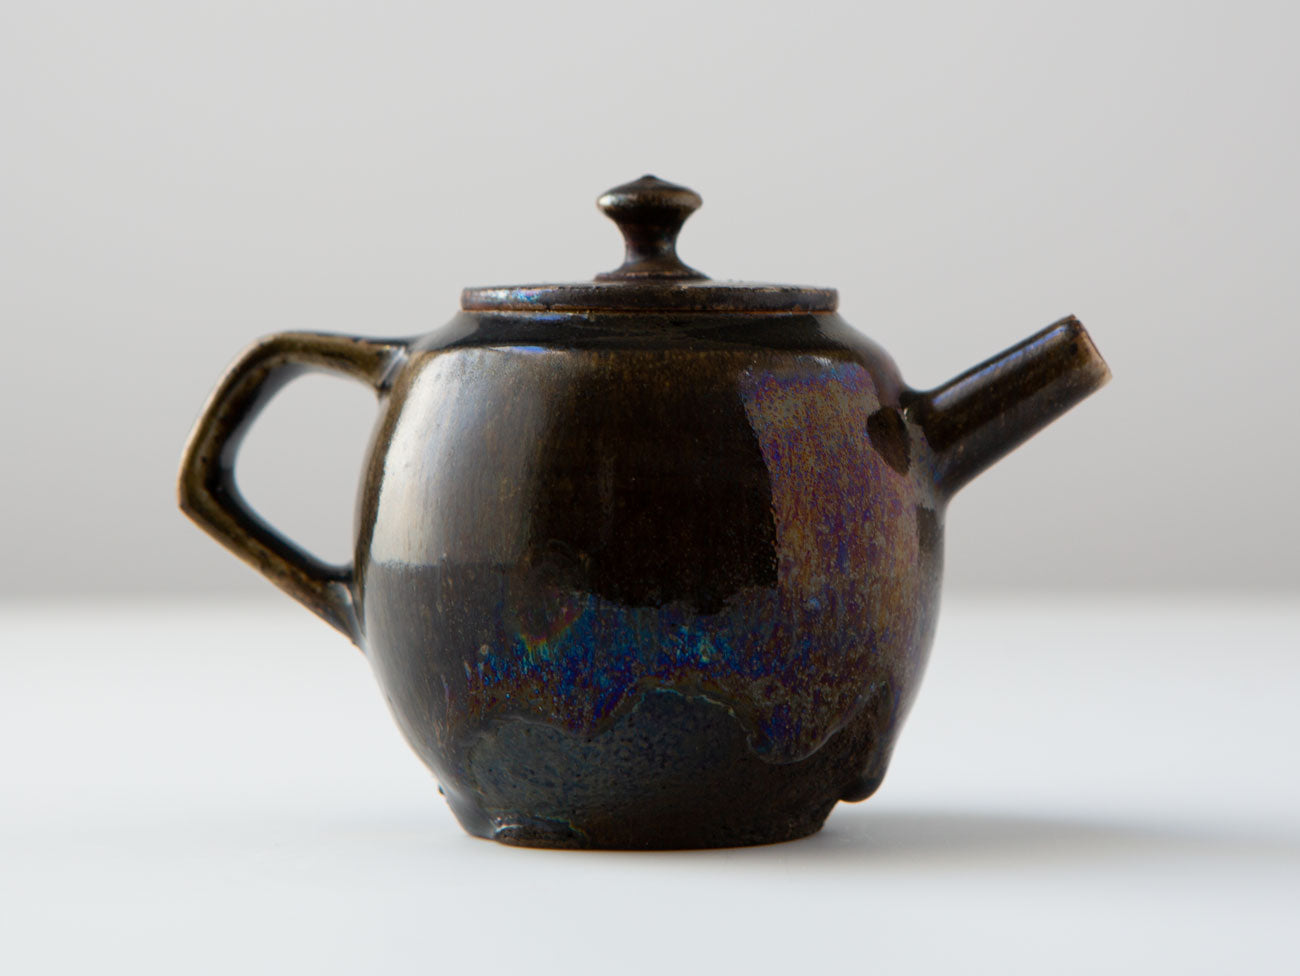 Wood-fired Teapot. Auguste. Liao Guo Hua.